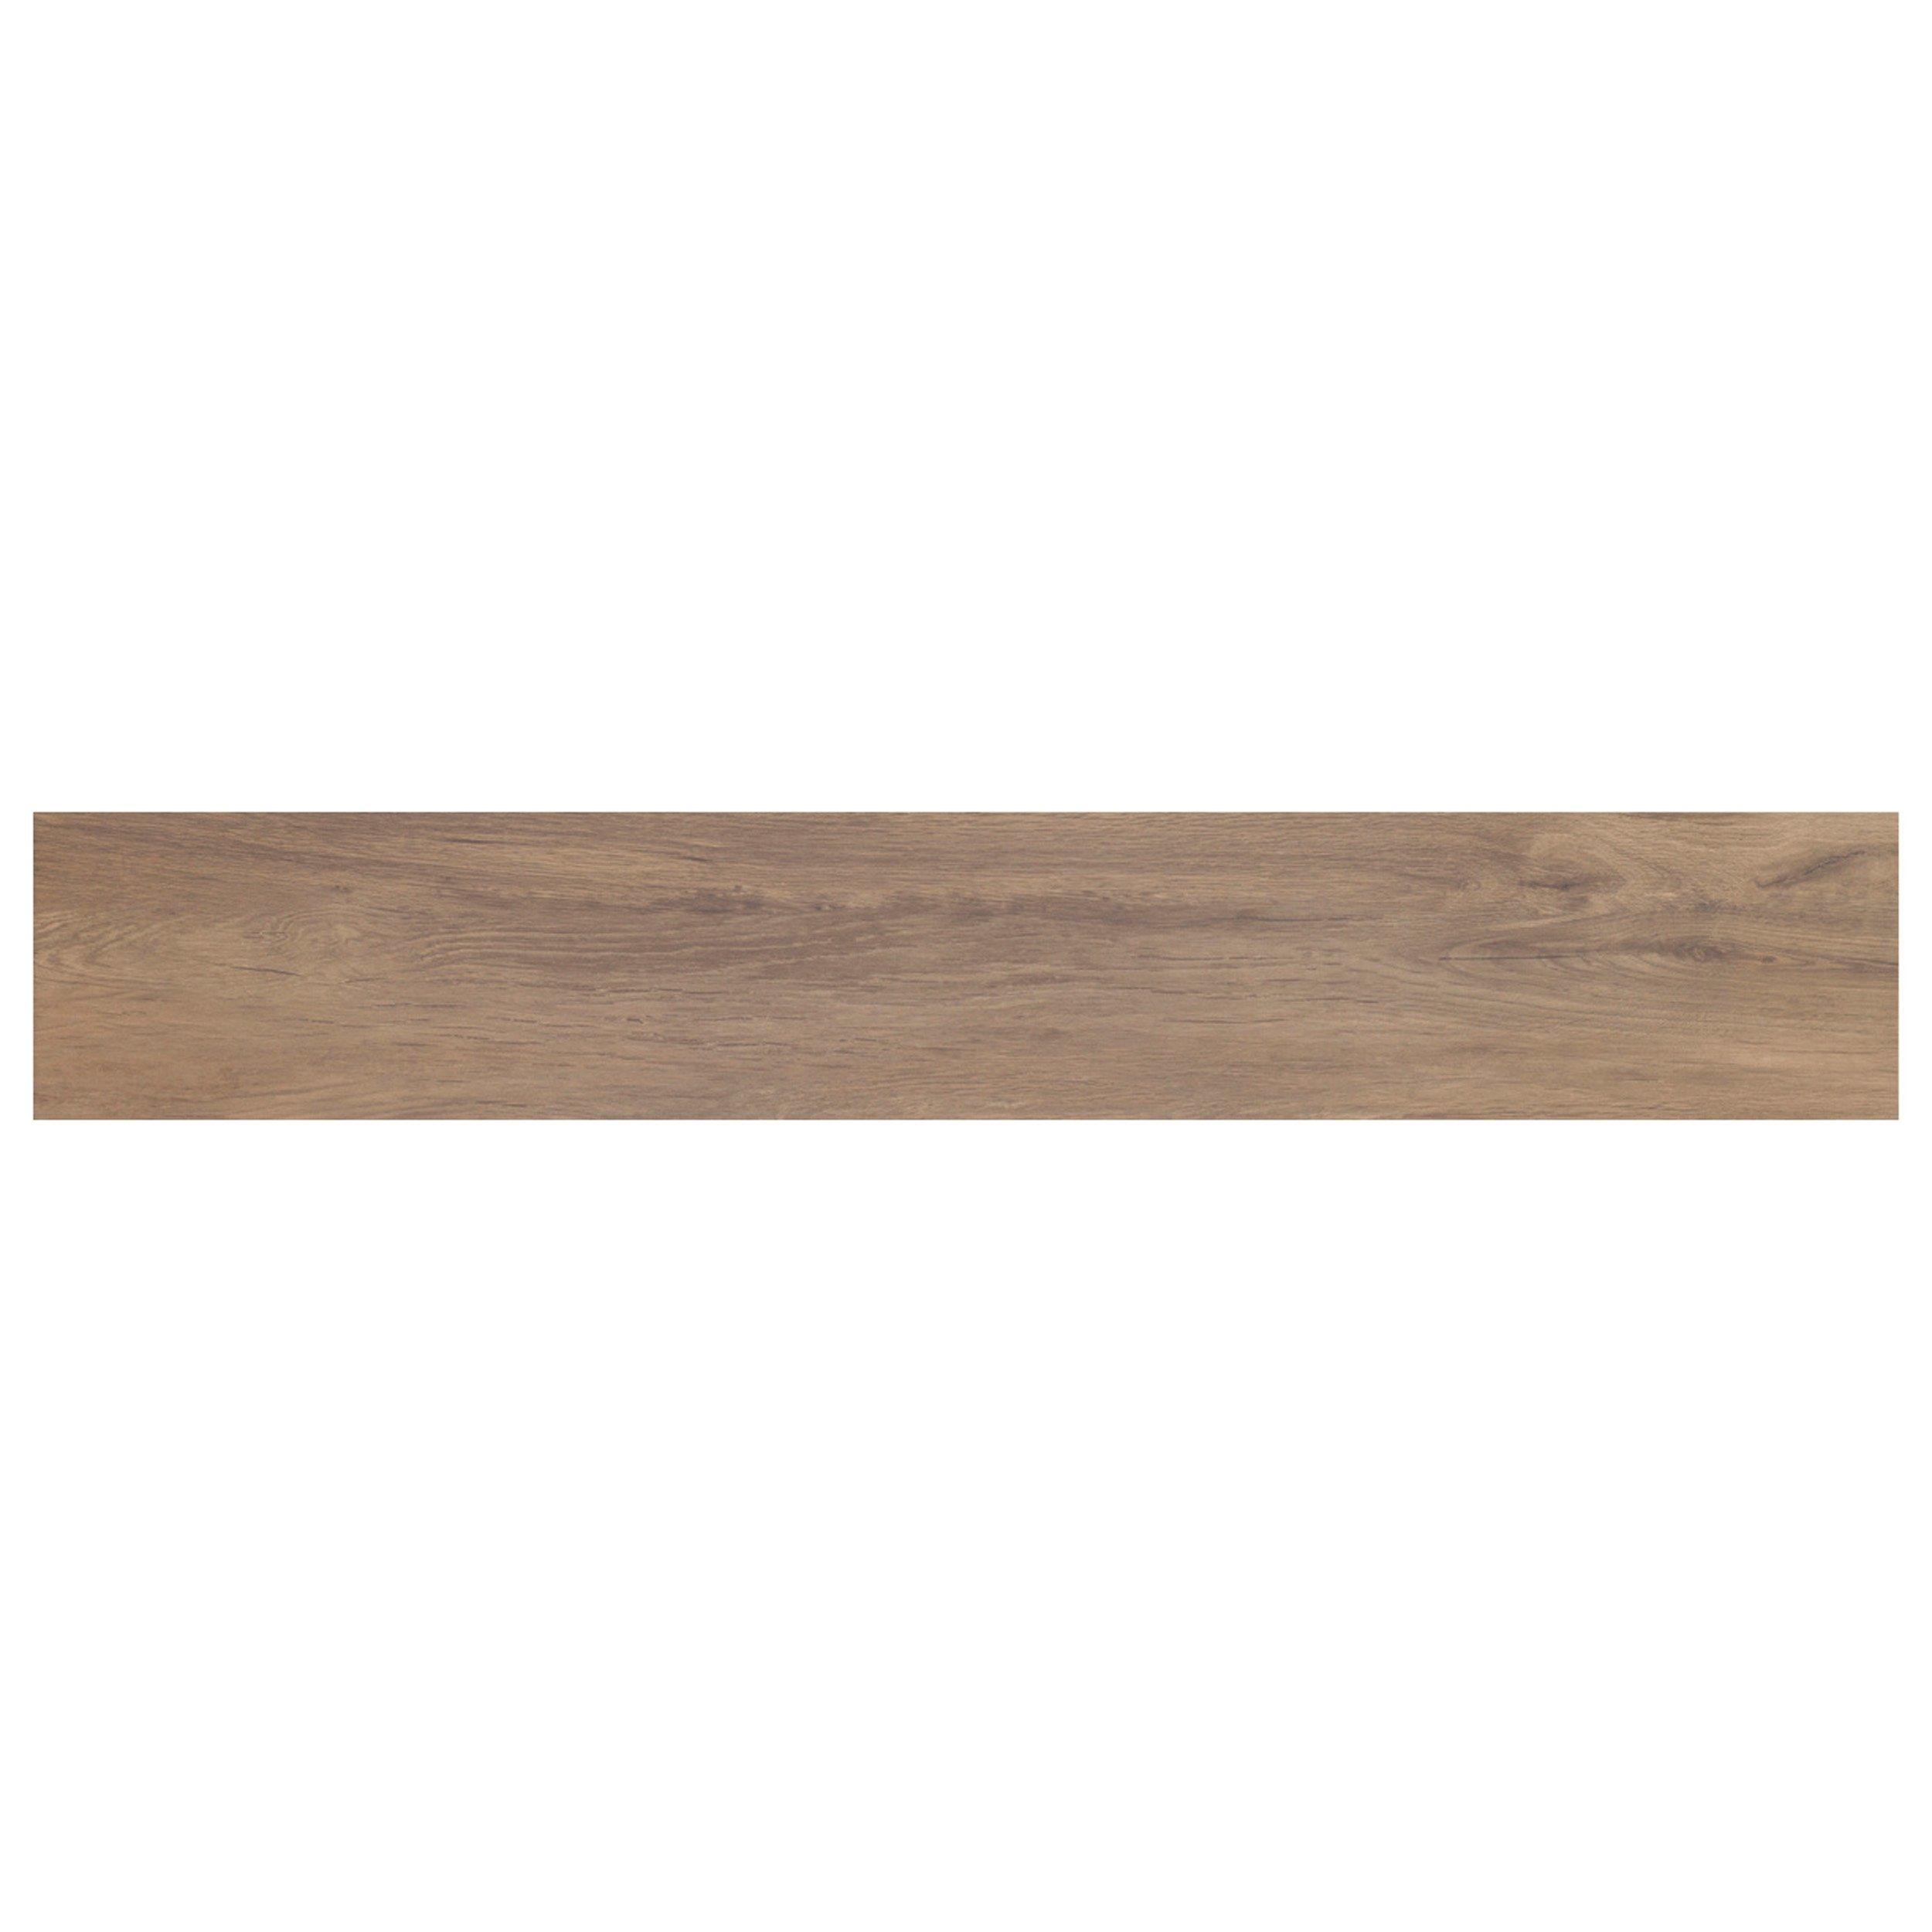 Austel Brown Wood Plank Porcelain Tile